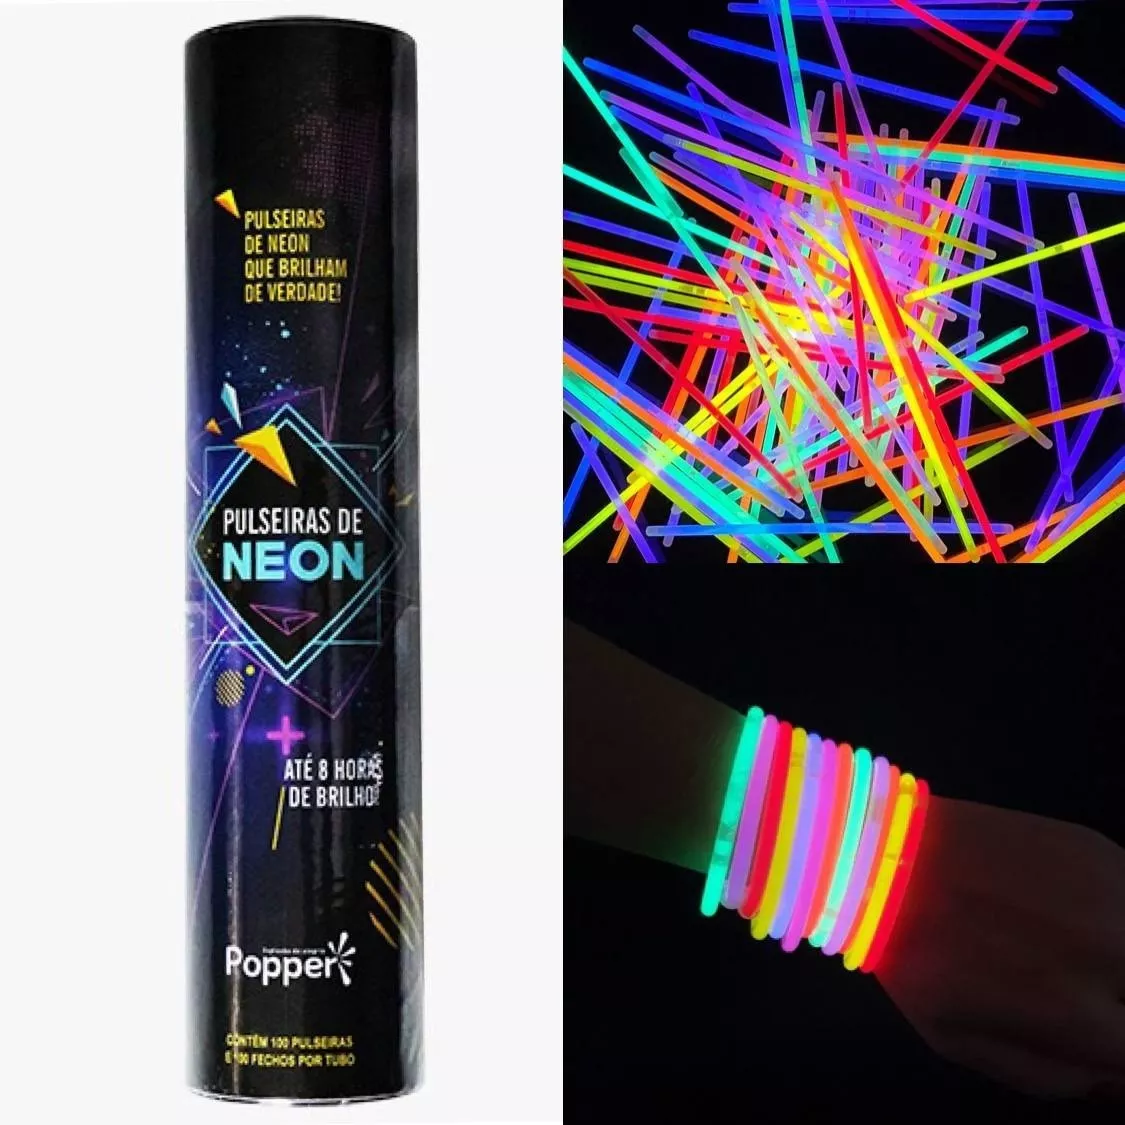 100 Pulseiras De Neon Popper - Brilham No Escuro